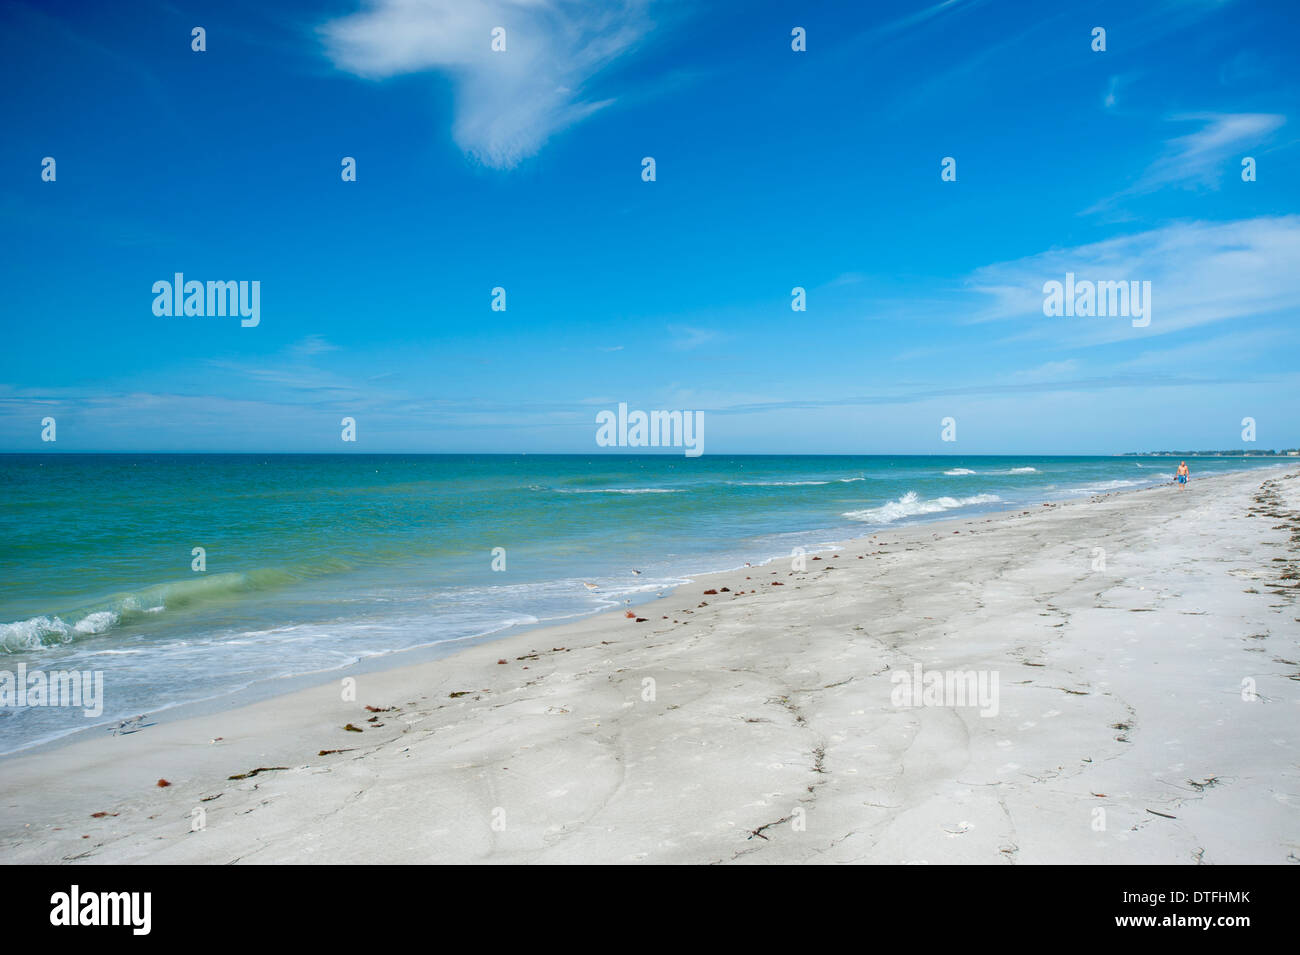 USA Florida Sarasota FL Longboat Key vuoto spiaggia di sabbia bianca con un solitario spiaggia soleggiata walker blu del cielo Foto Stock